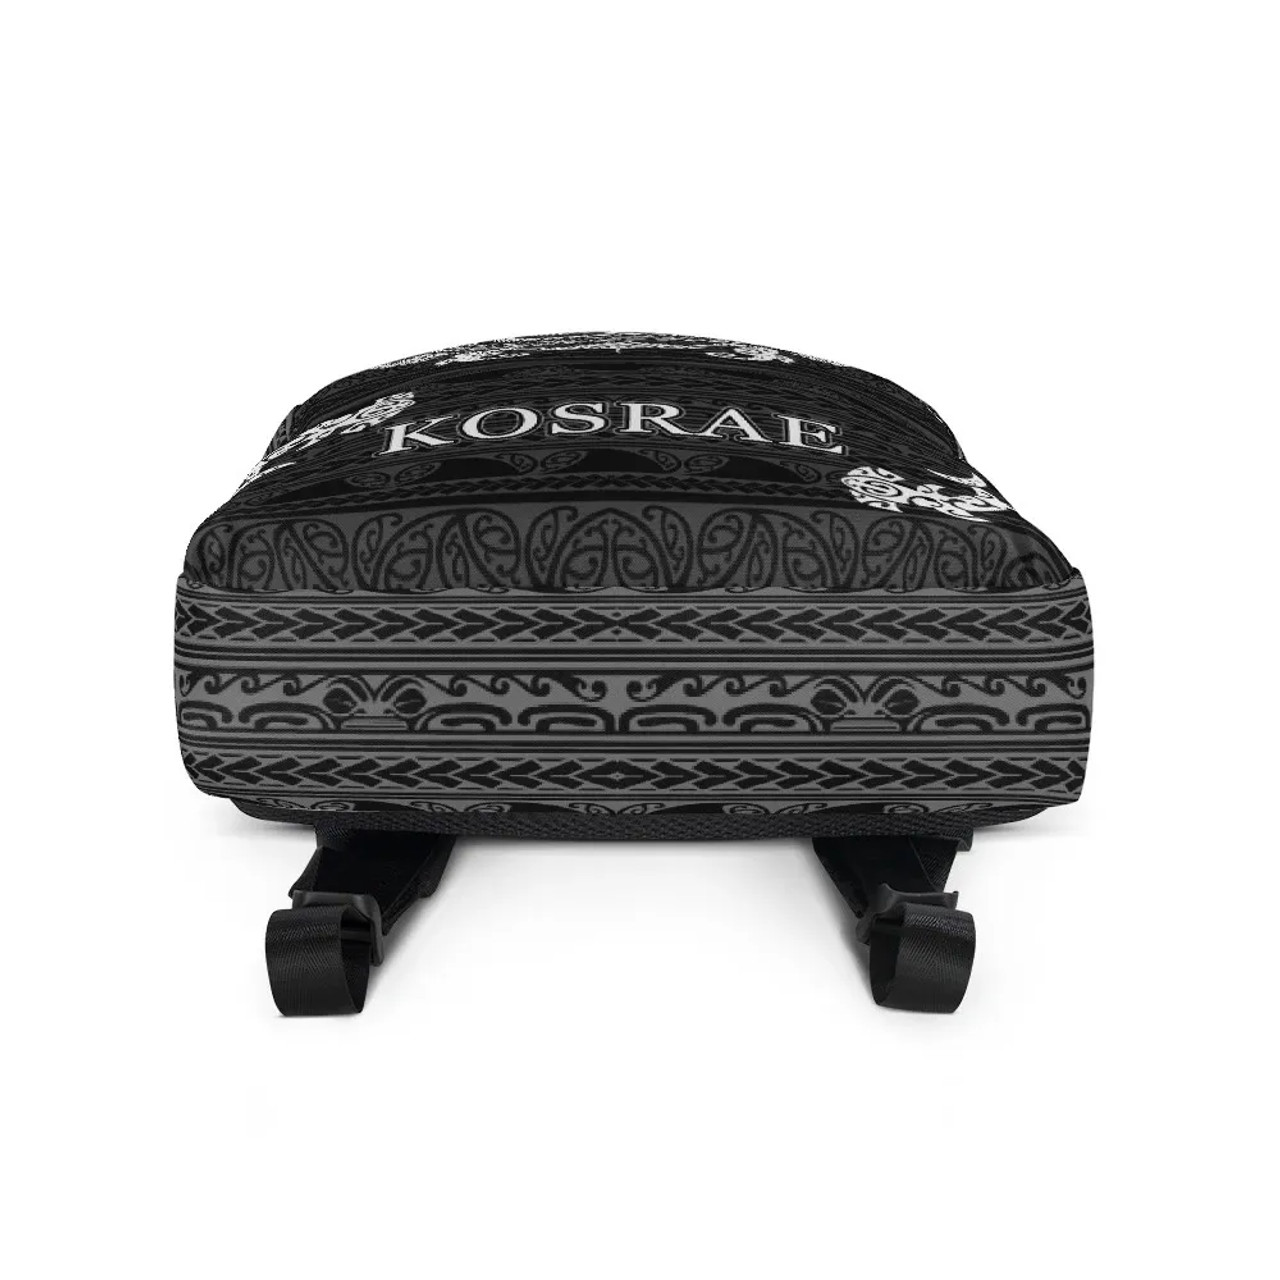 Kosrae State Backpack - Ocean Animals 7